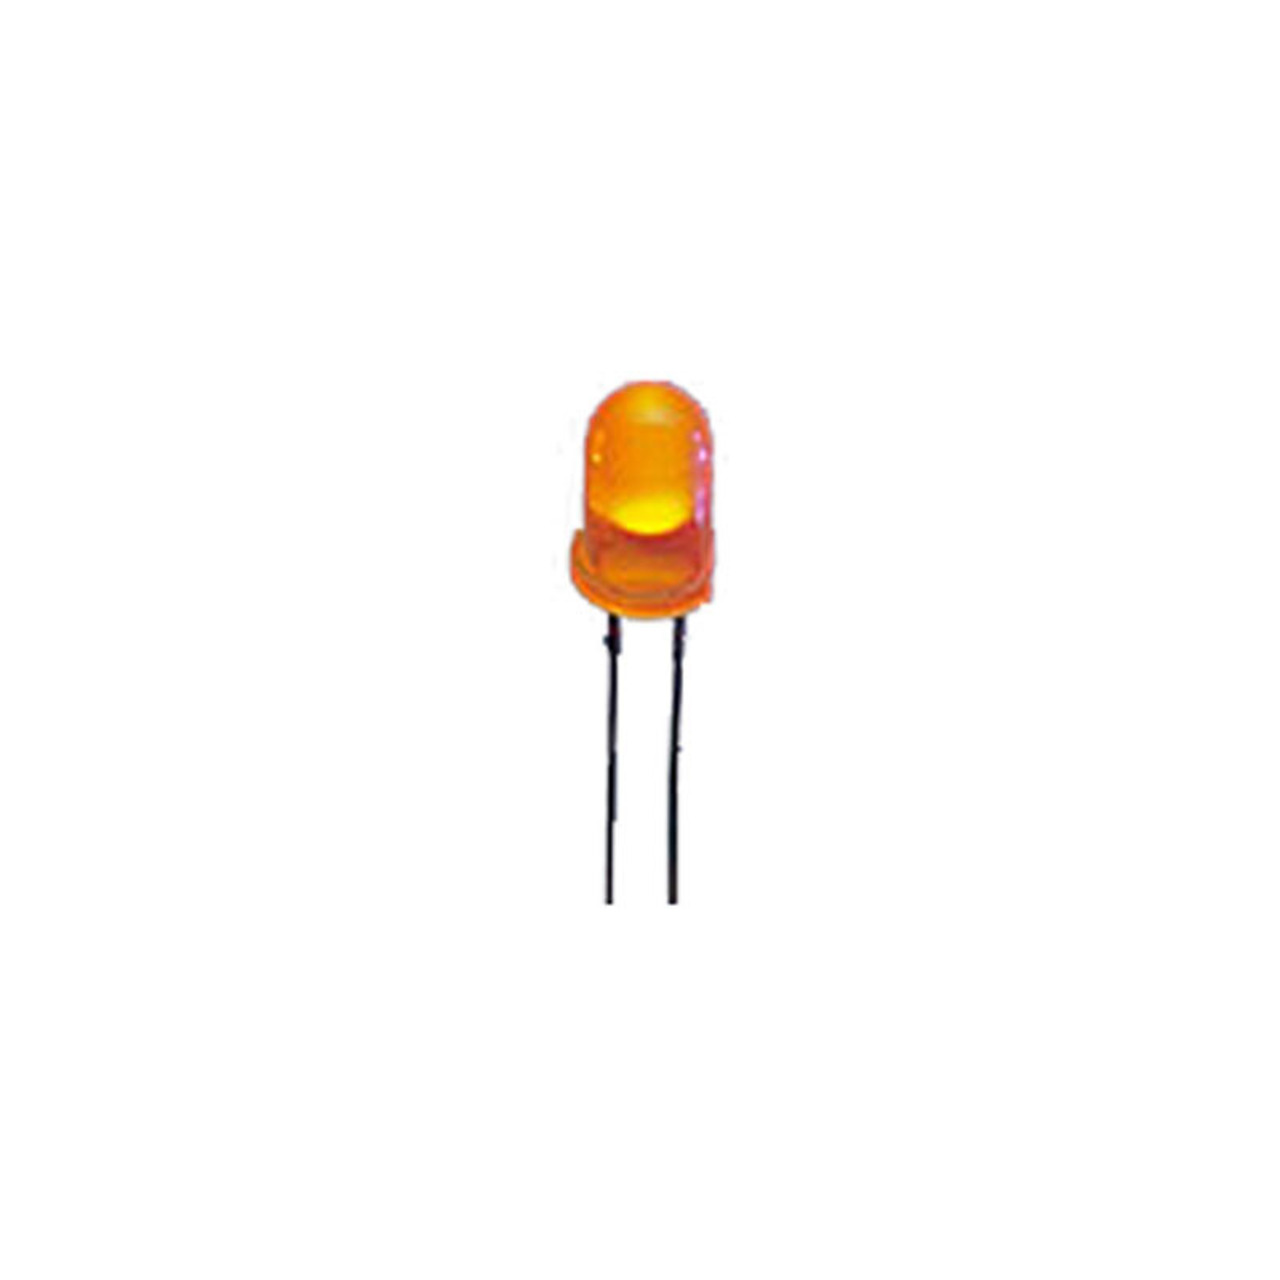 ELV LED 3 mm- orange- 1100 mcd